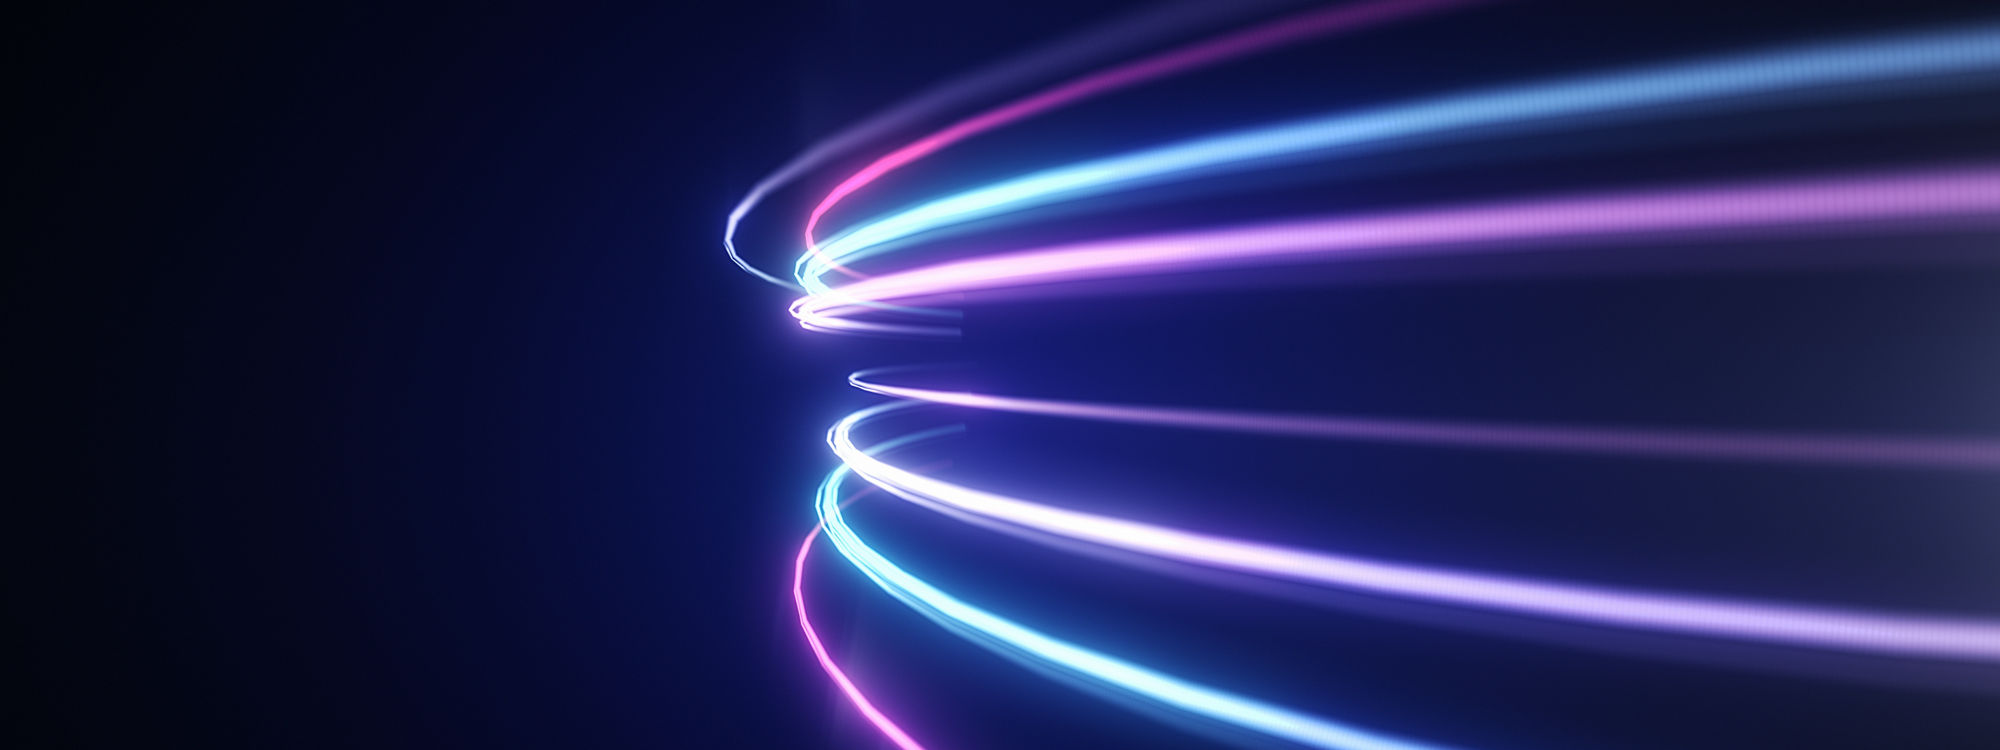 Abstract neon light streaks motion background 4k